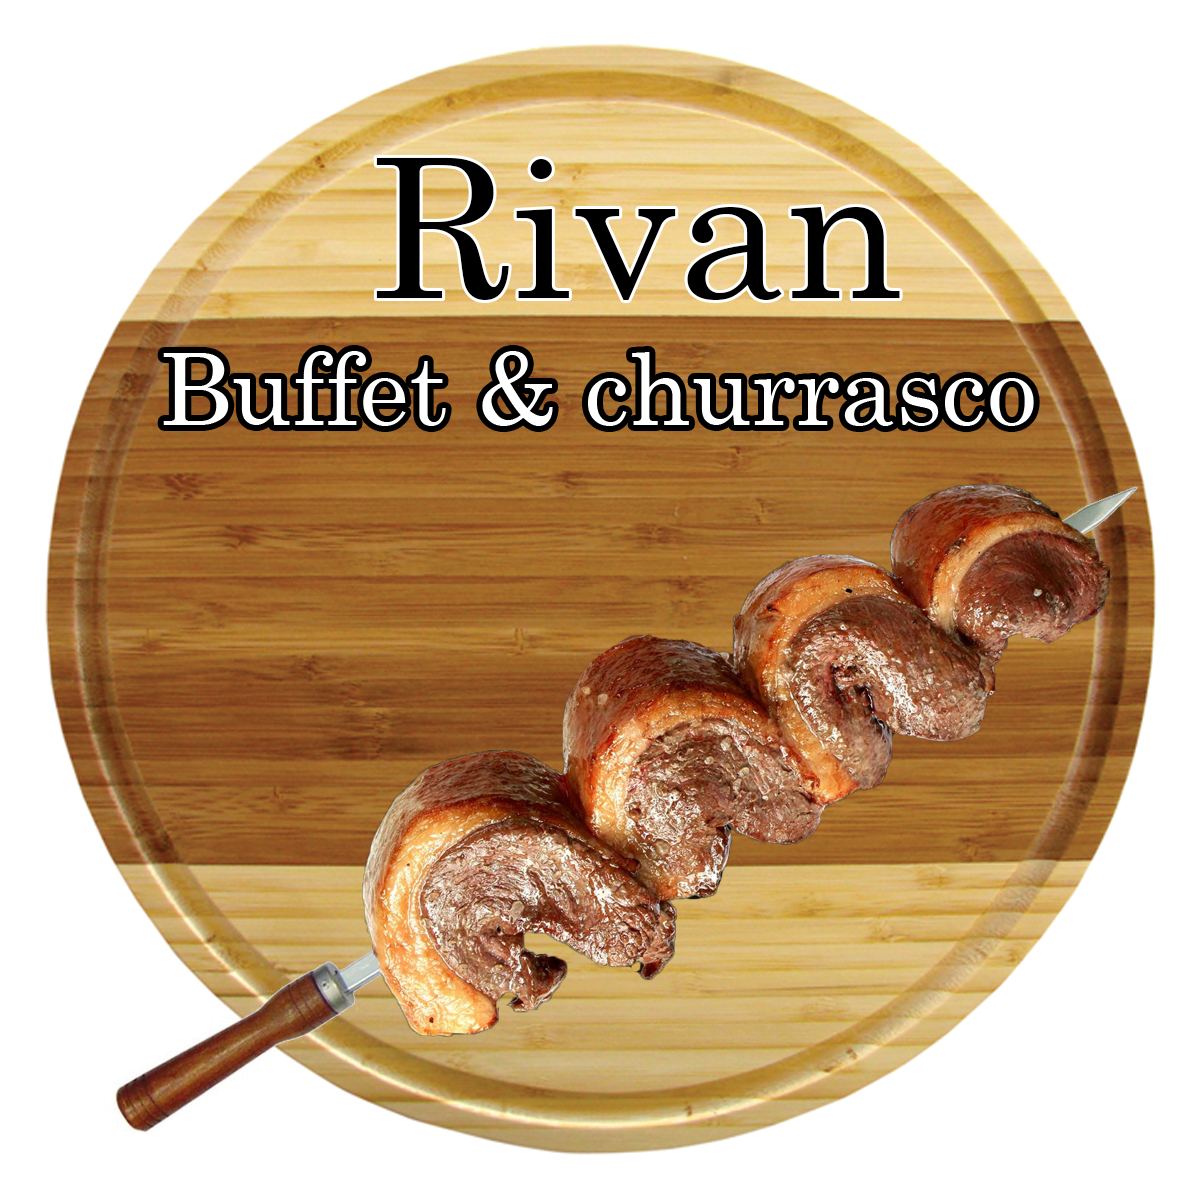 Rivan Buffet & Churrasco